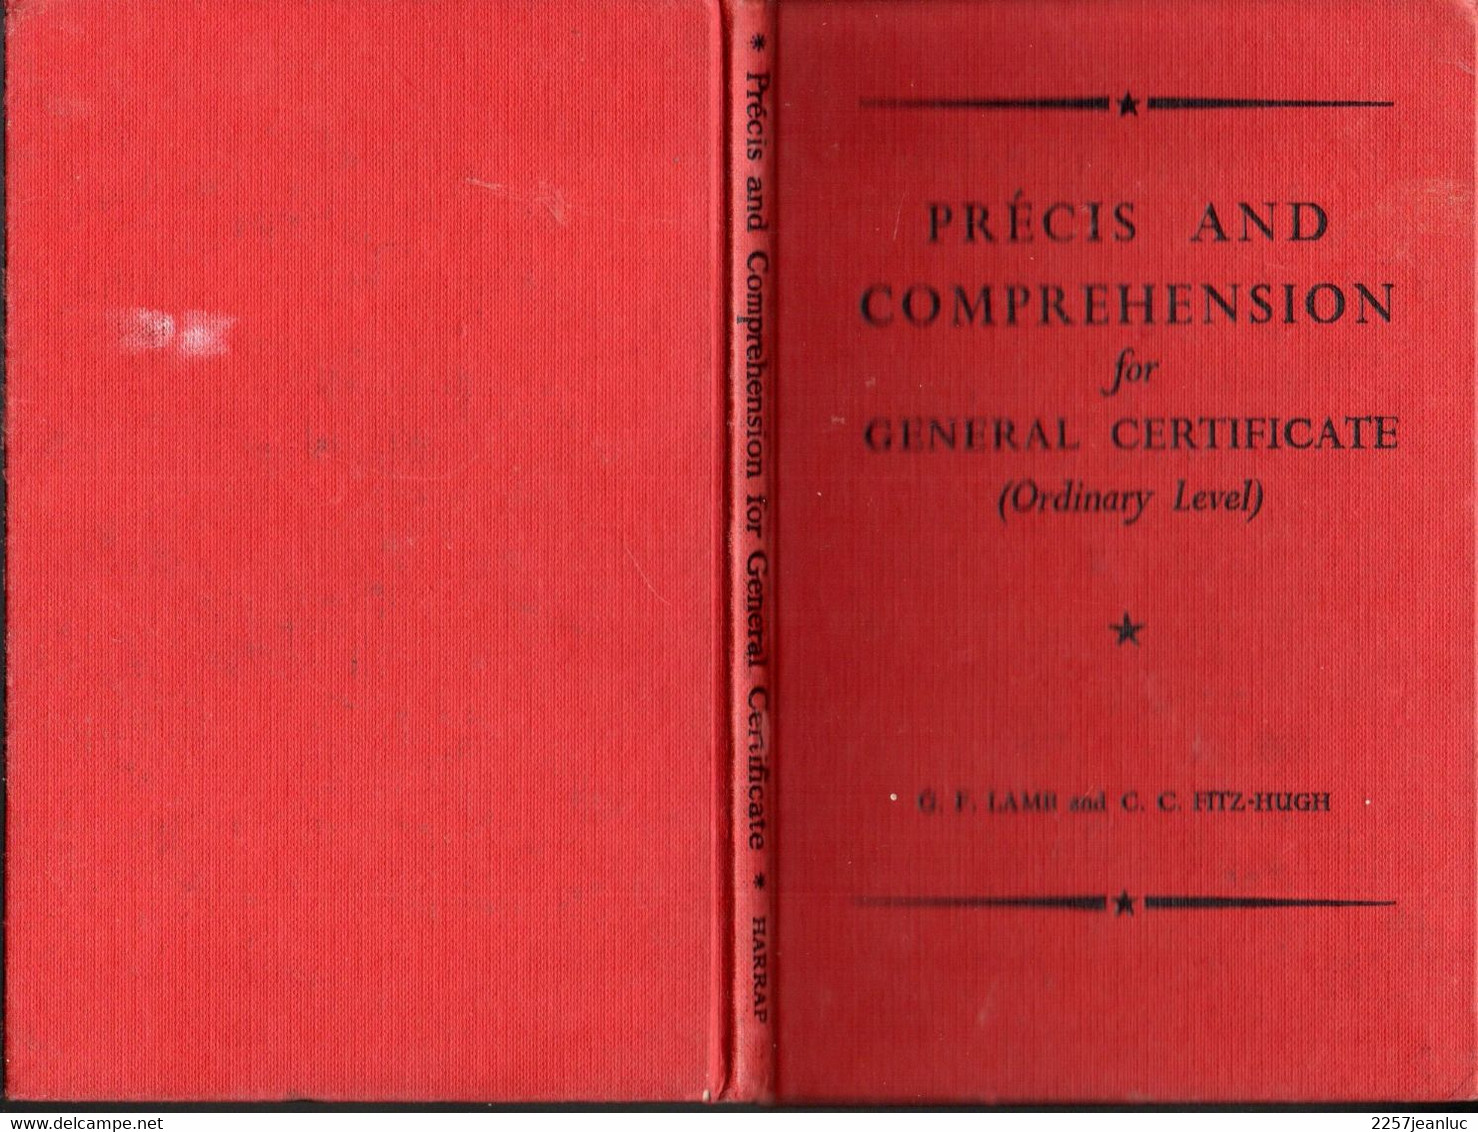 Précis And Comprehension For Géneral Certificate - 1960 - English Language/ Grammar